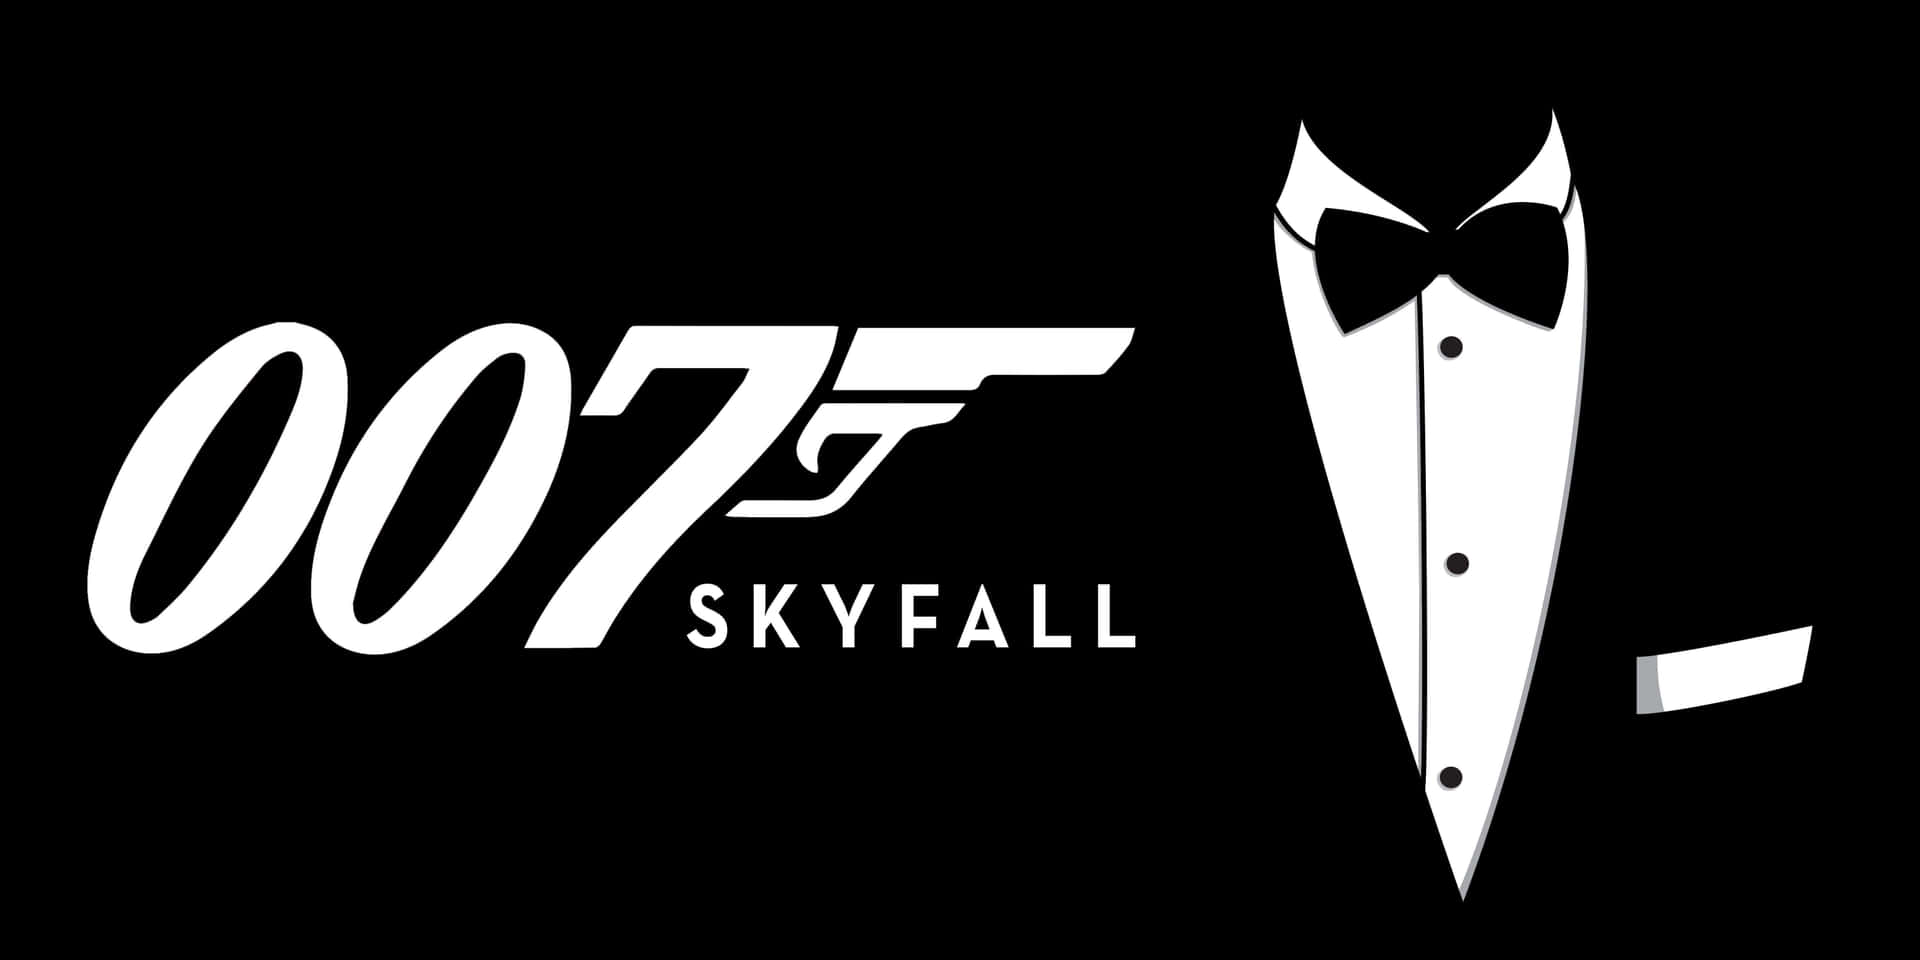 James Bond007 Skyfall Logo Wallpaper